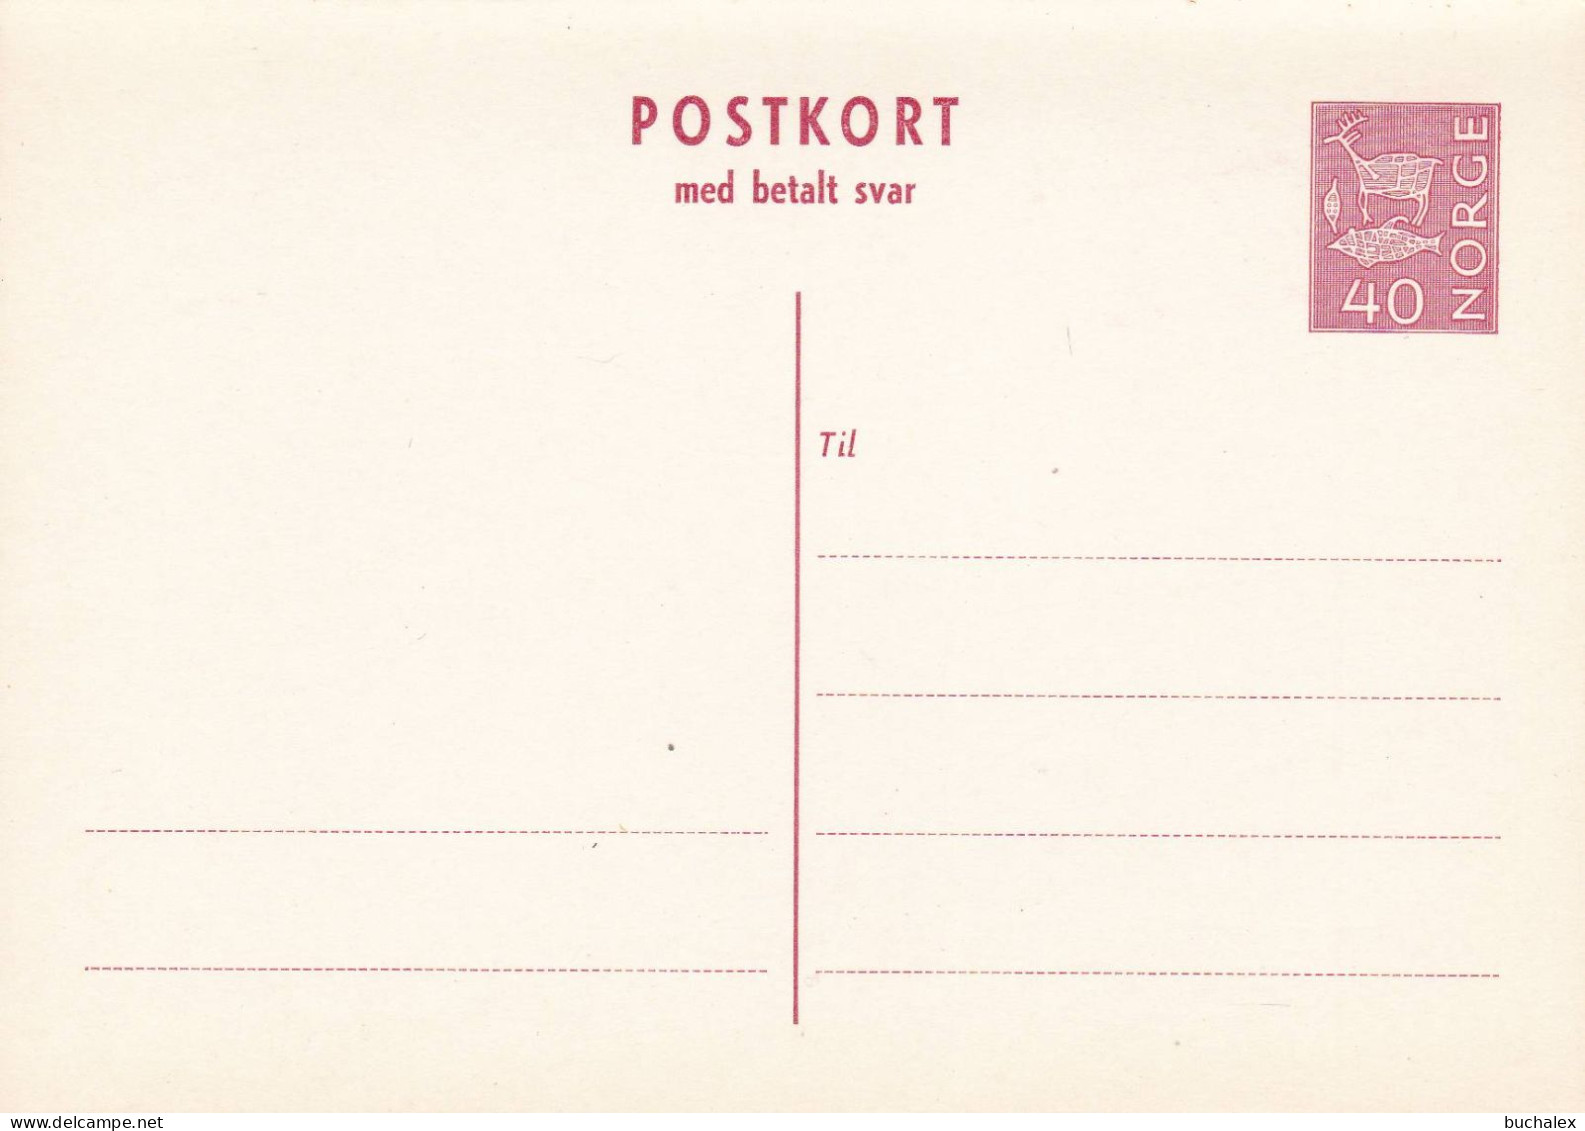 Norwegen Postkort Med Betalt Svar P130 Ungelaufen - Entiers Postaux